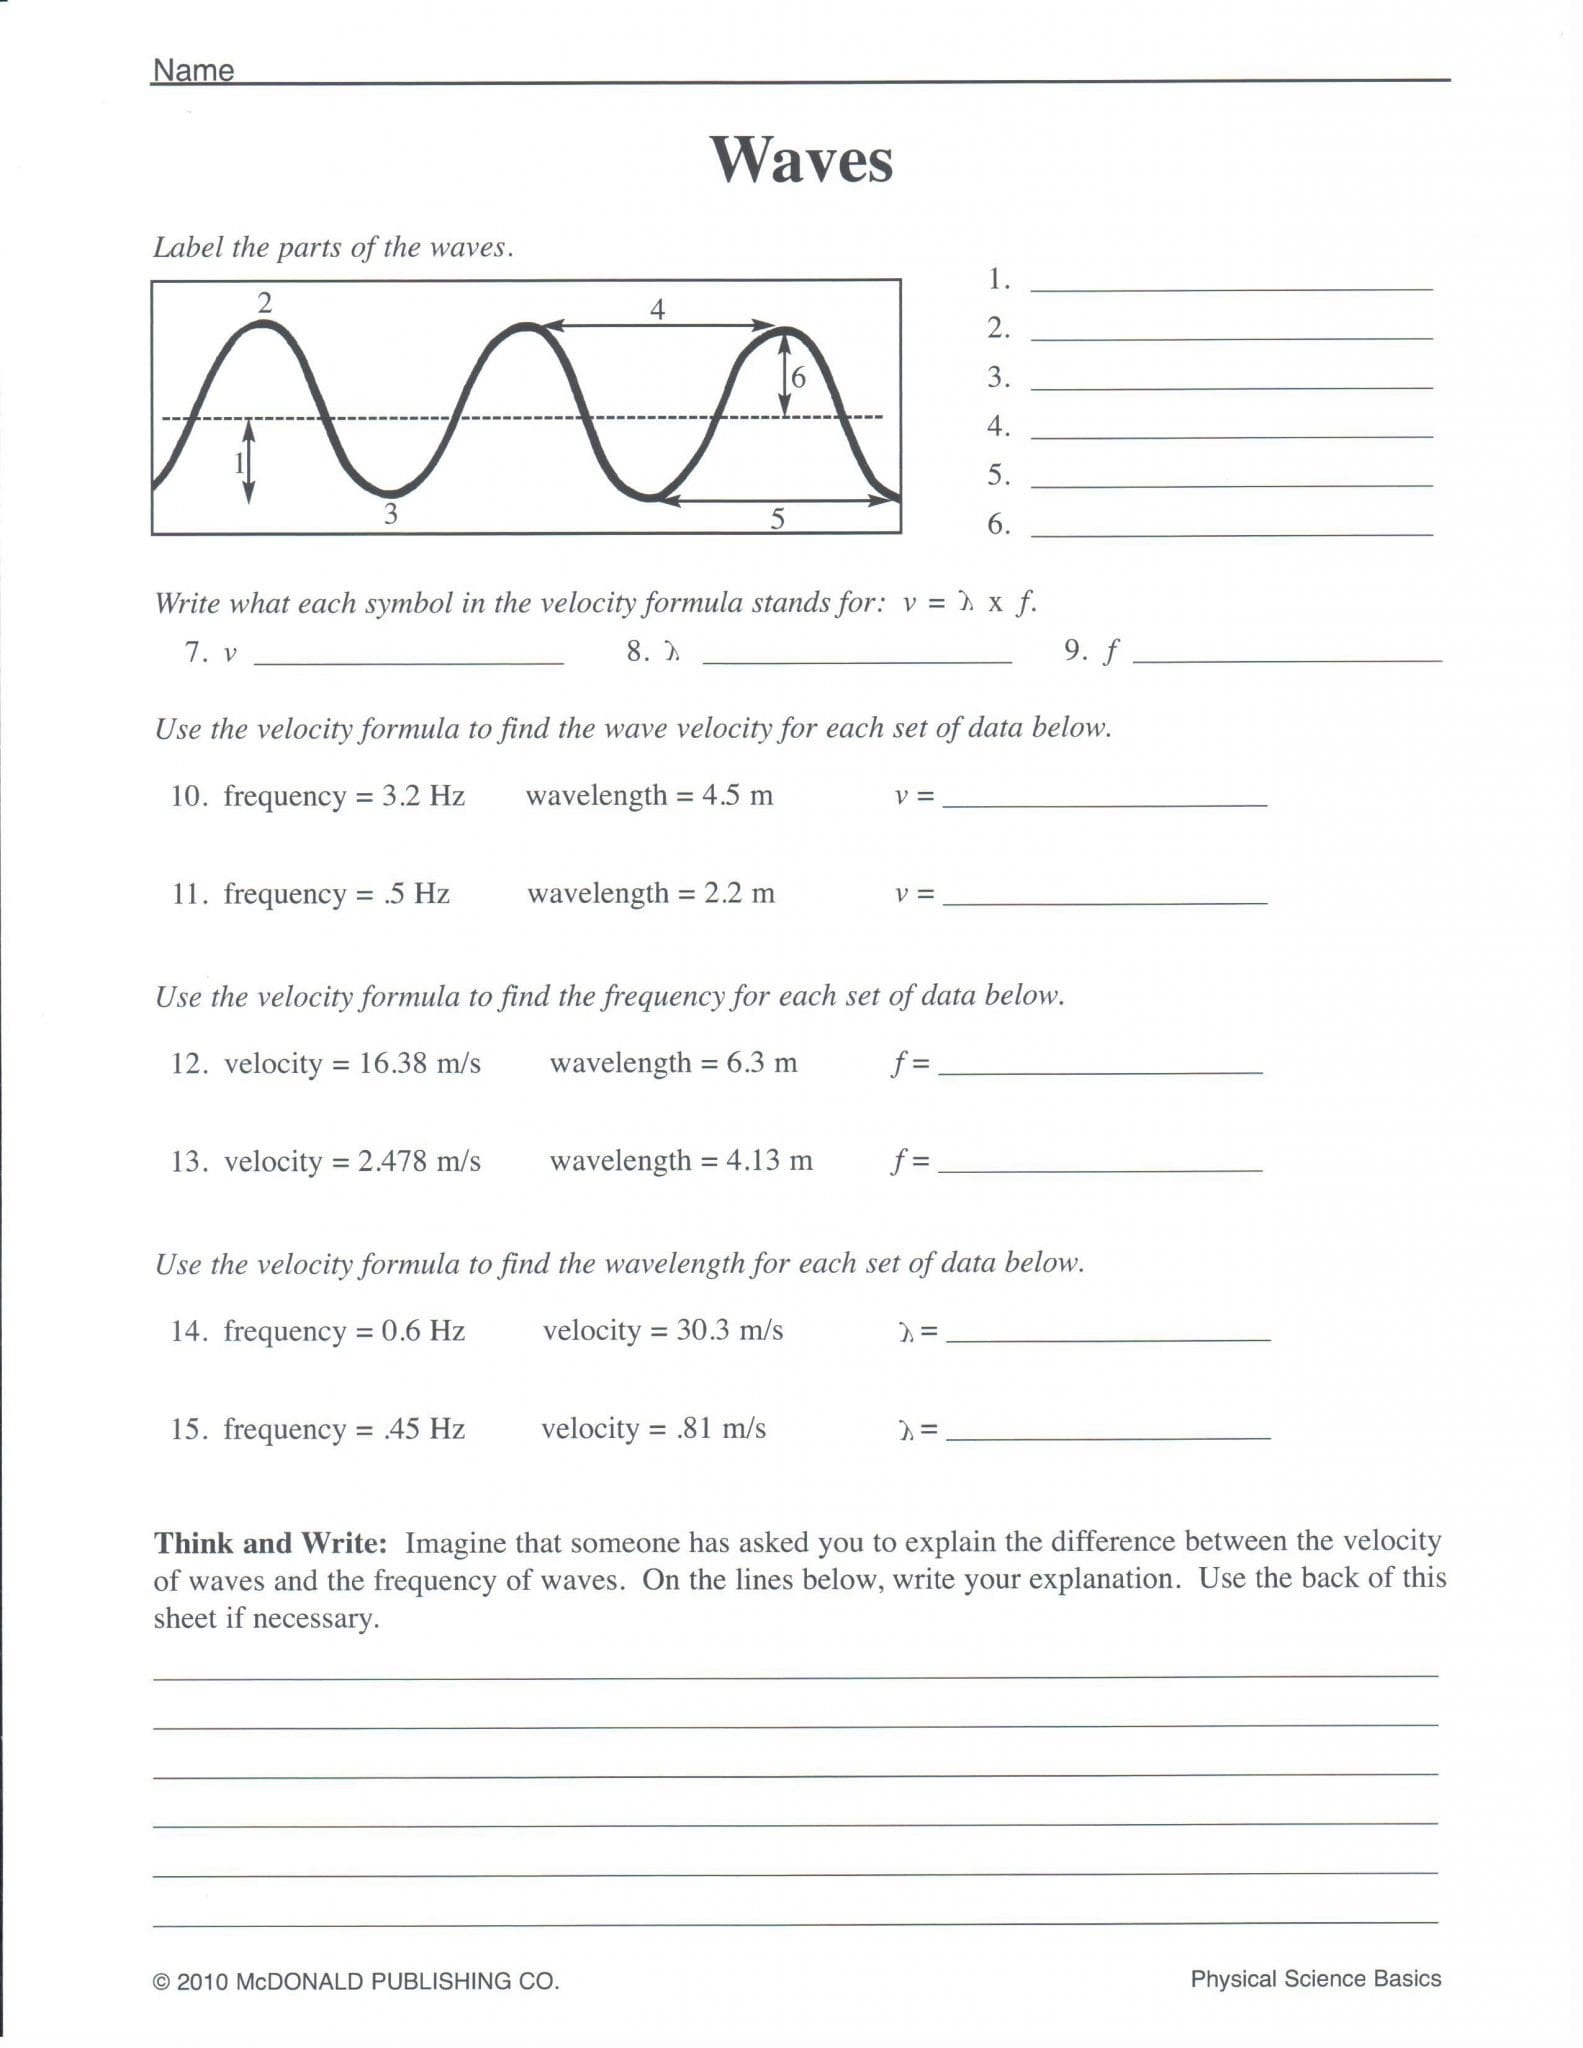 Waves Sound And Light Worksheet Answer Key  Briefencounters As Well As Waves Sound And Light Worksheet Answer Key